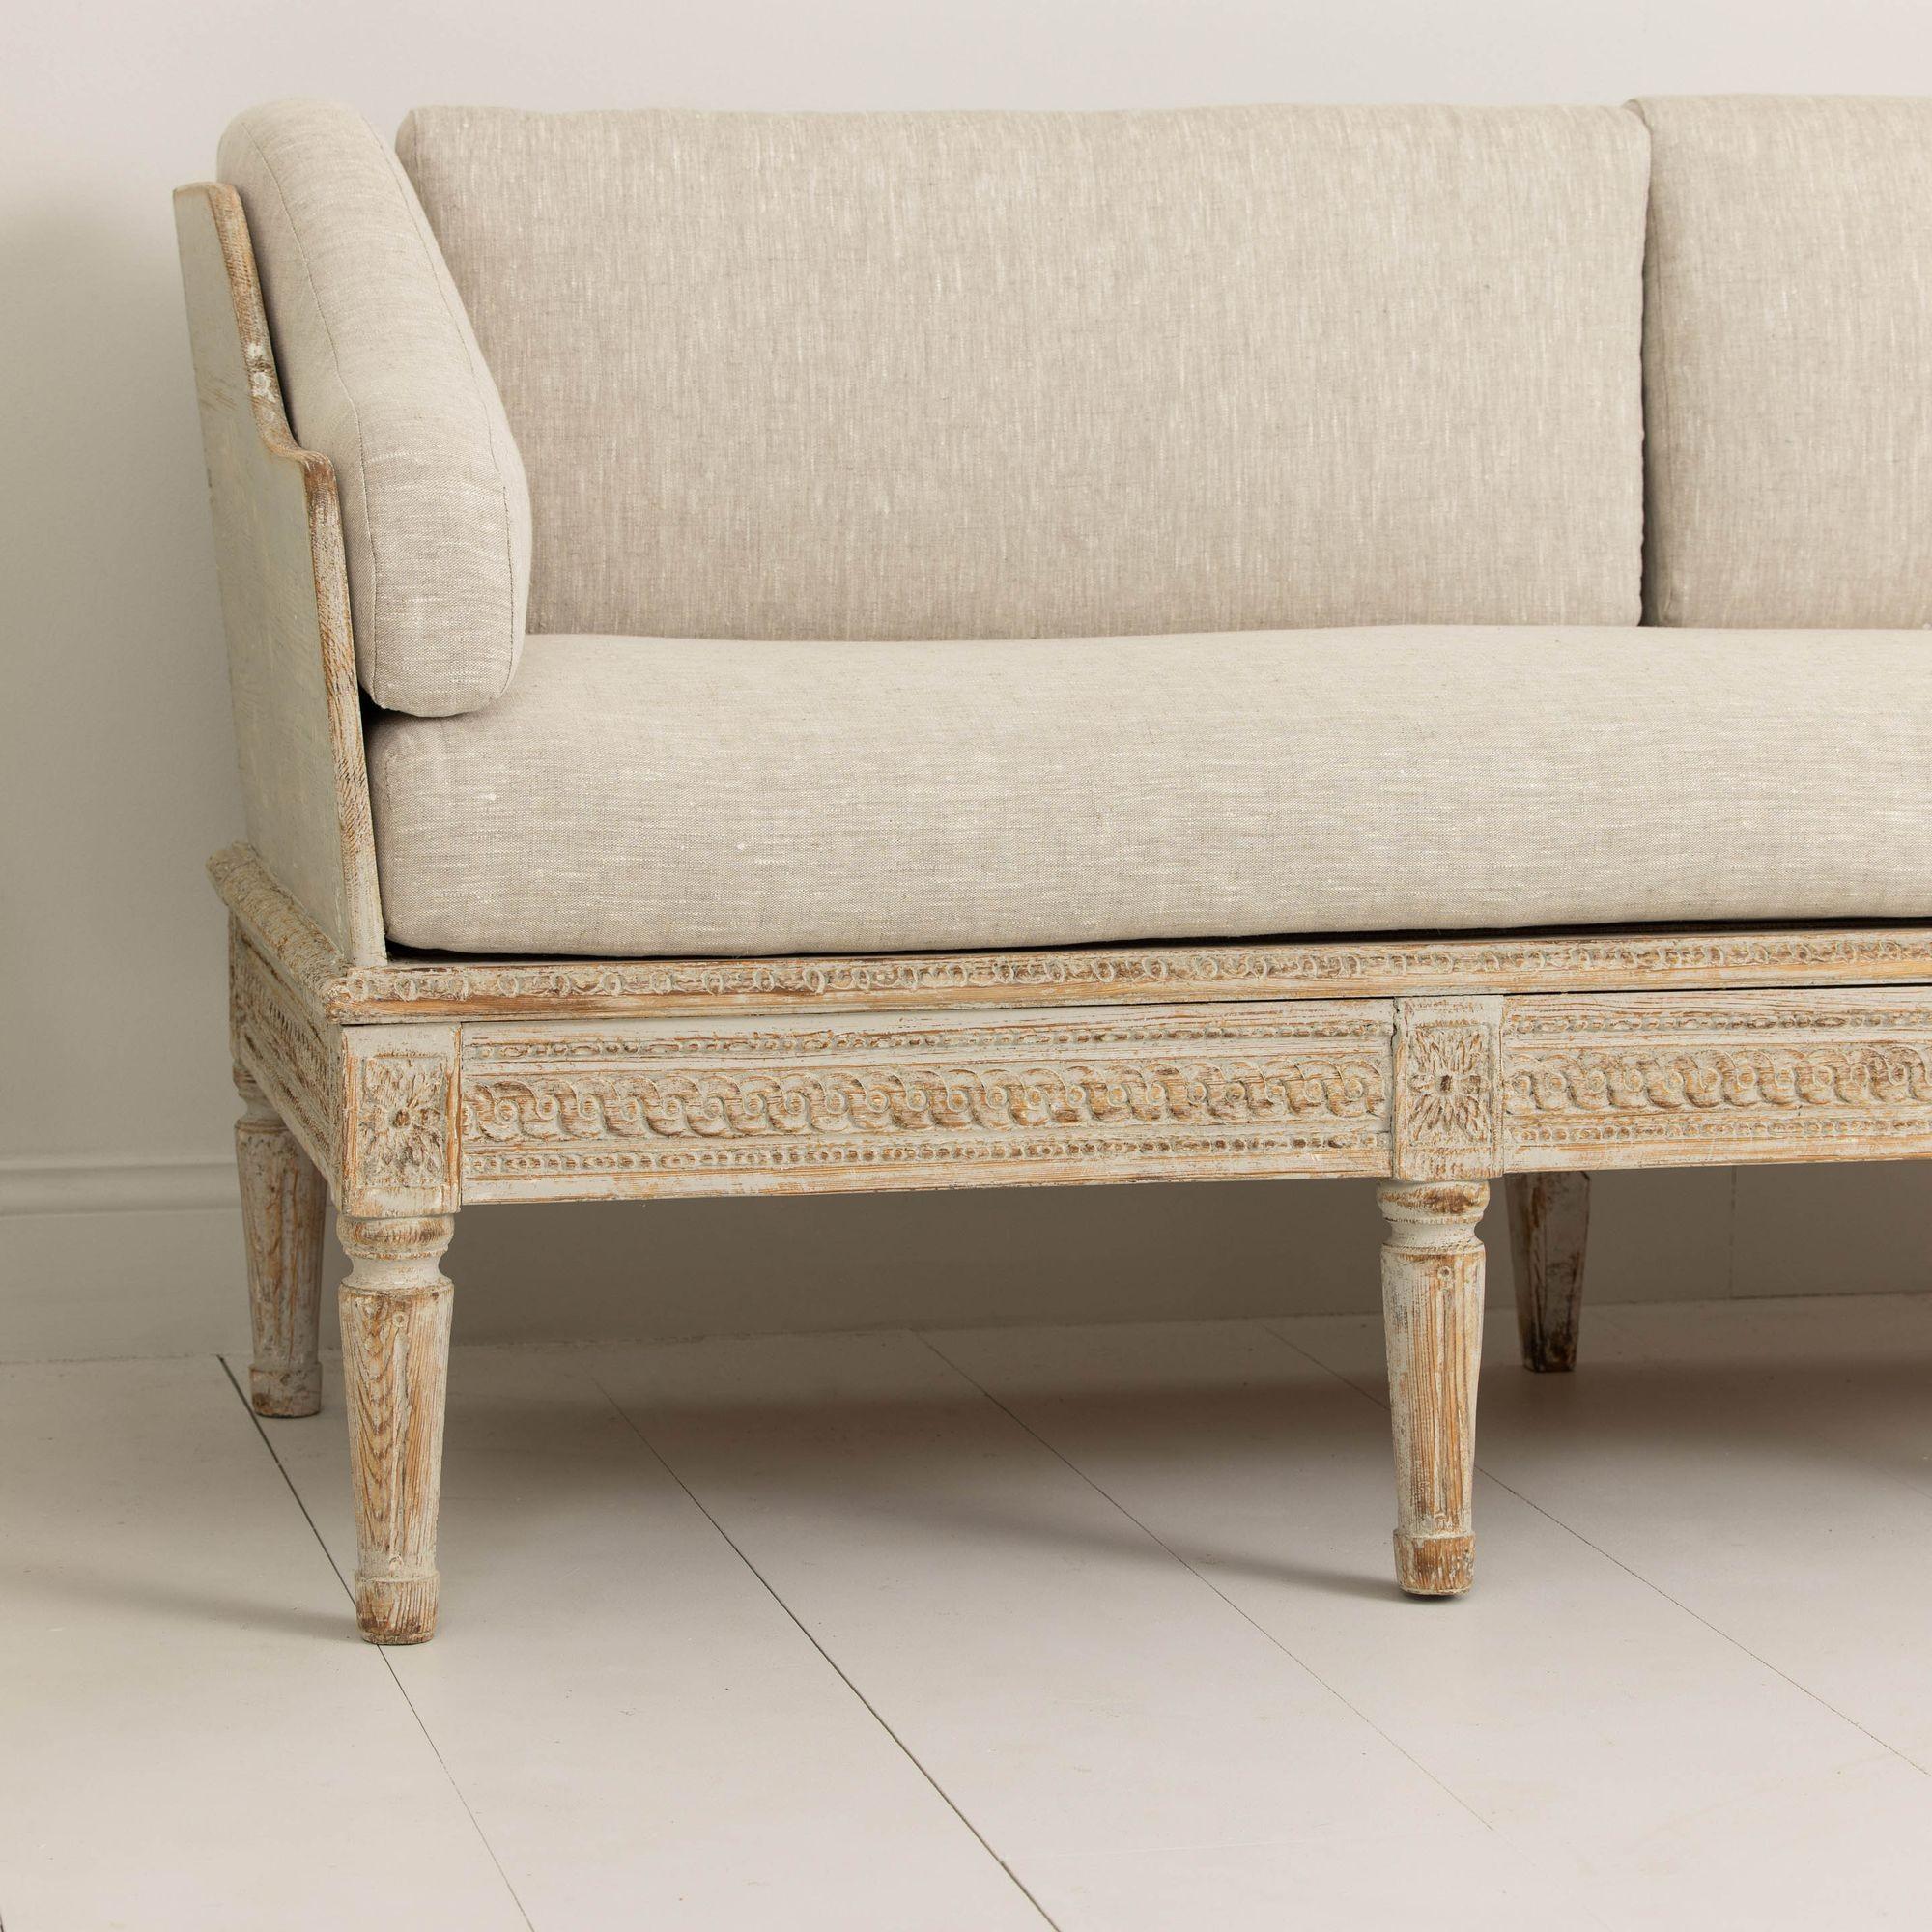 18th c. Swedish Gustavian Period Painted Sofa 'Trägsoffa' In Excellent Condition For Sale In Wichita, KS